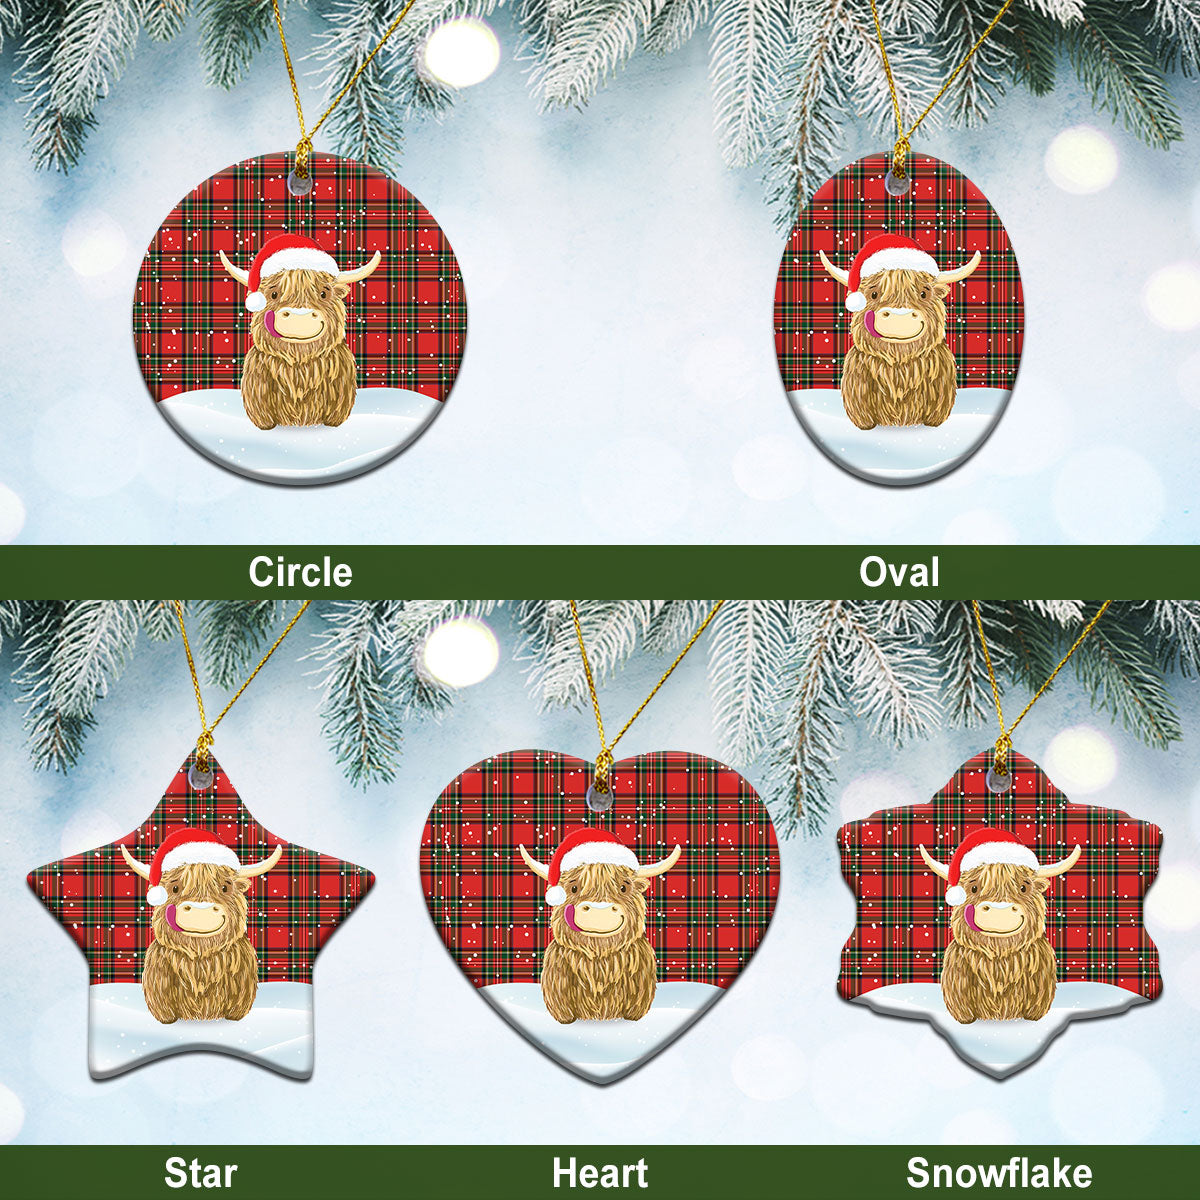 Monypenny Tartan Christmas Ceramic Ornament - Highland Cows Style